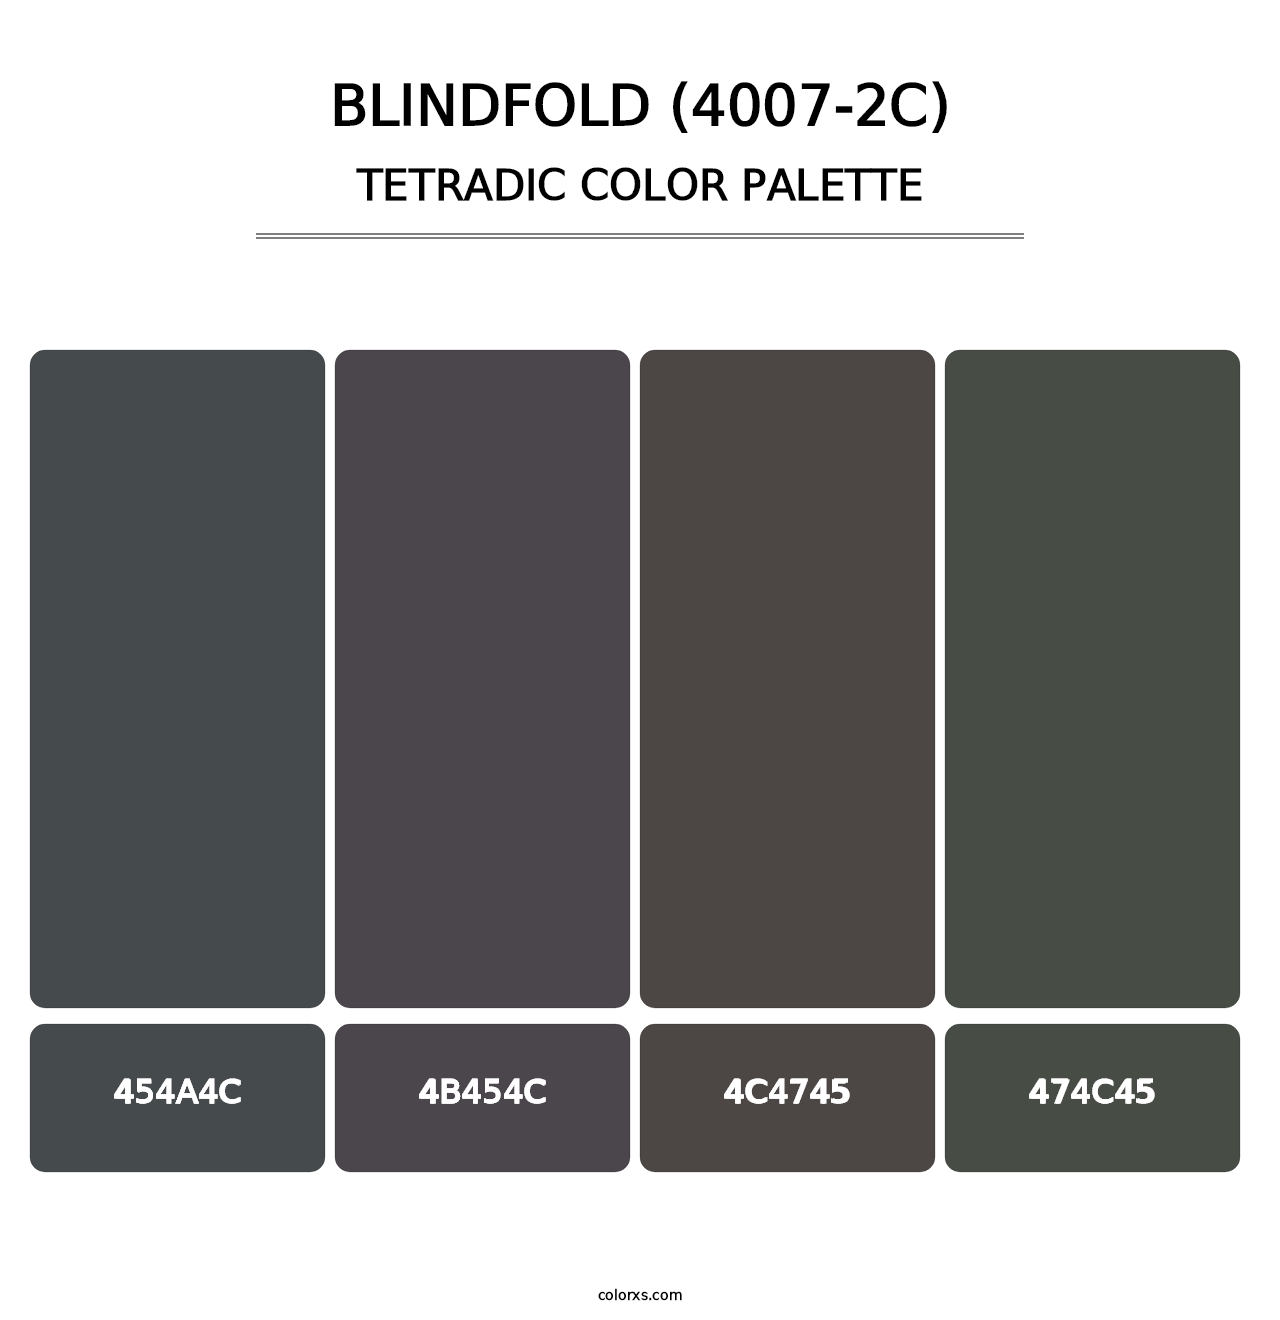 Blindfold (4007-2C) - Tetradic Color Palette